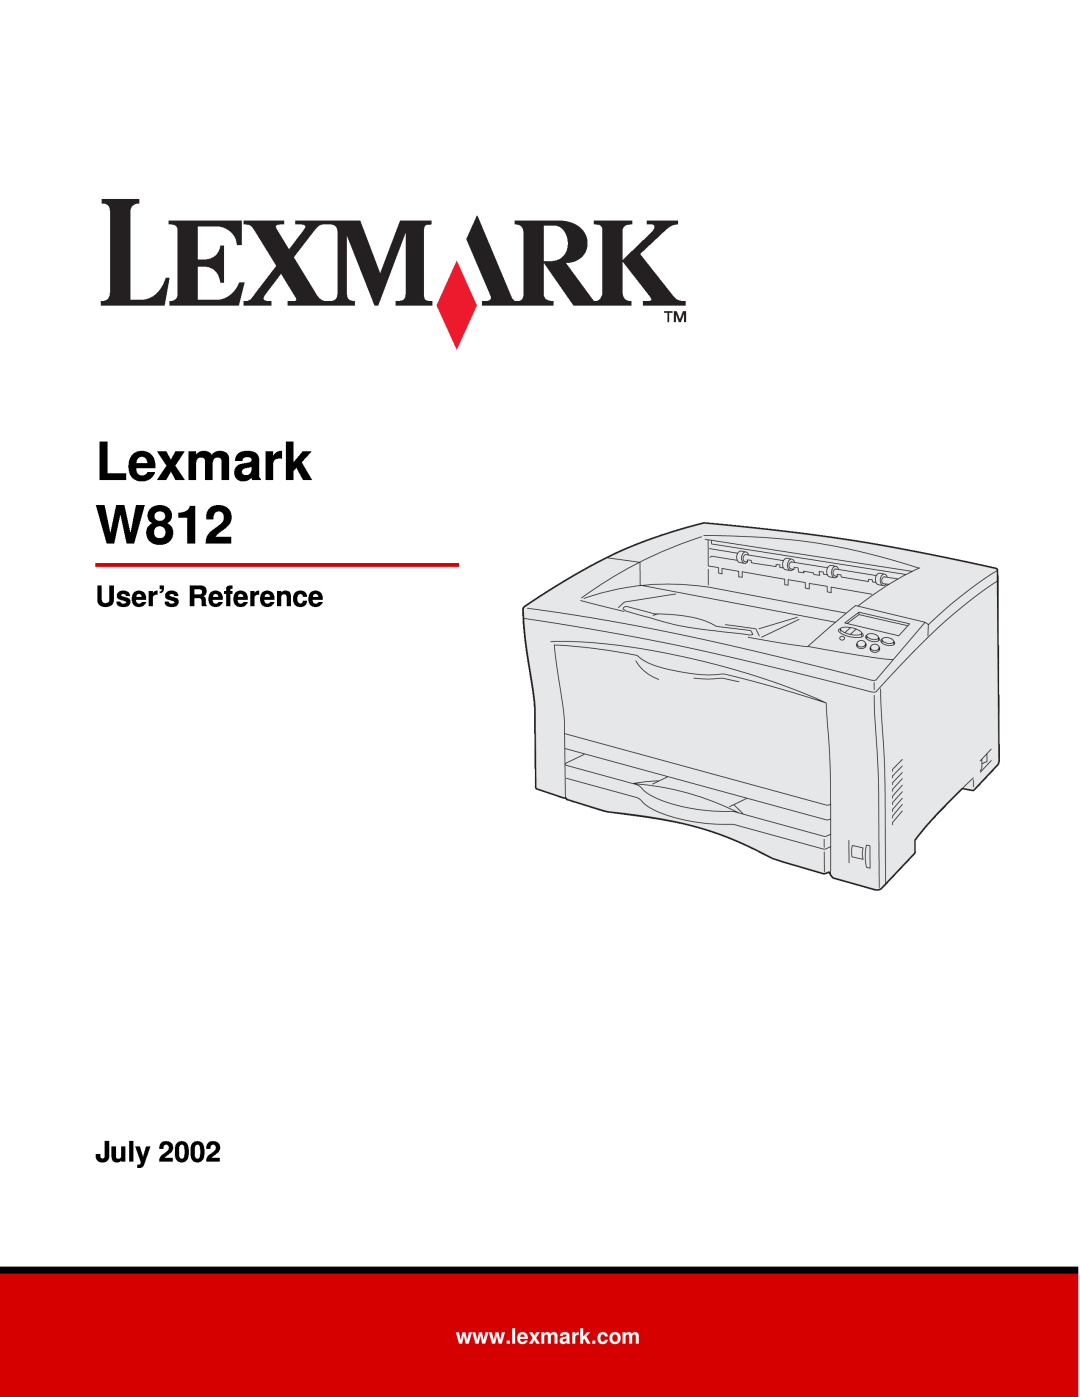 Lexmark manual Lexmark W812, User’s Reference July 